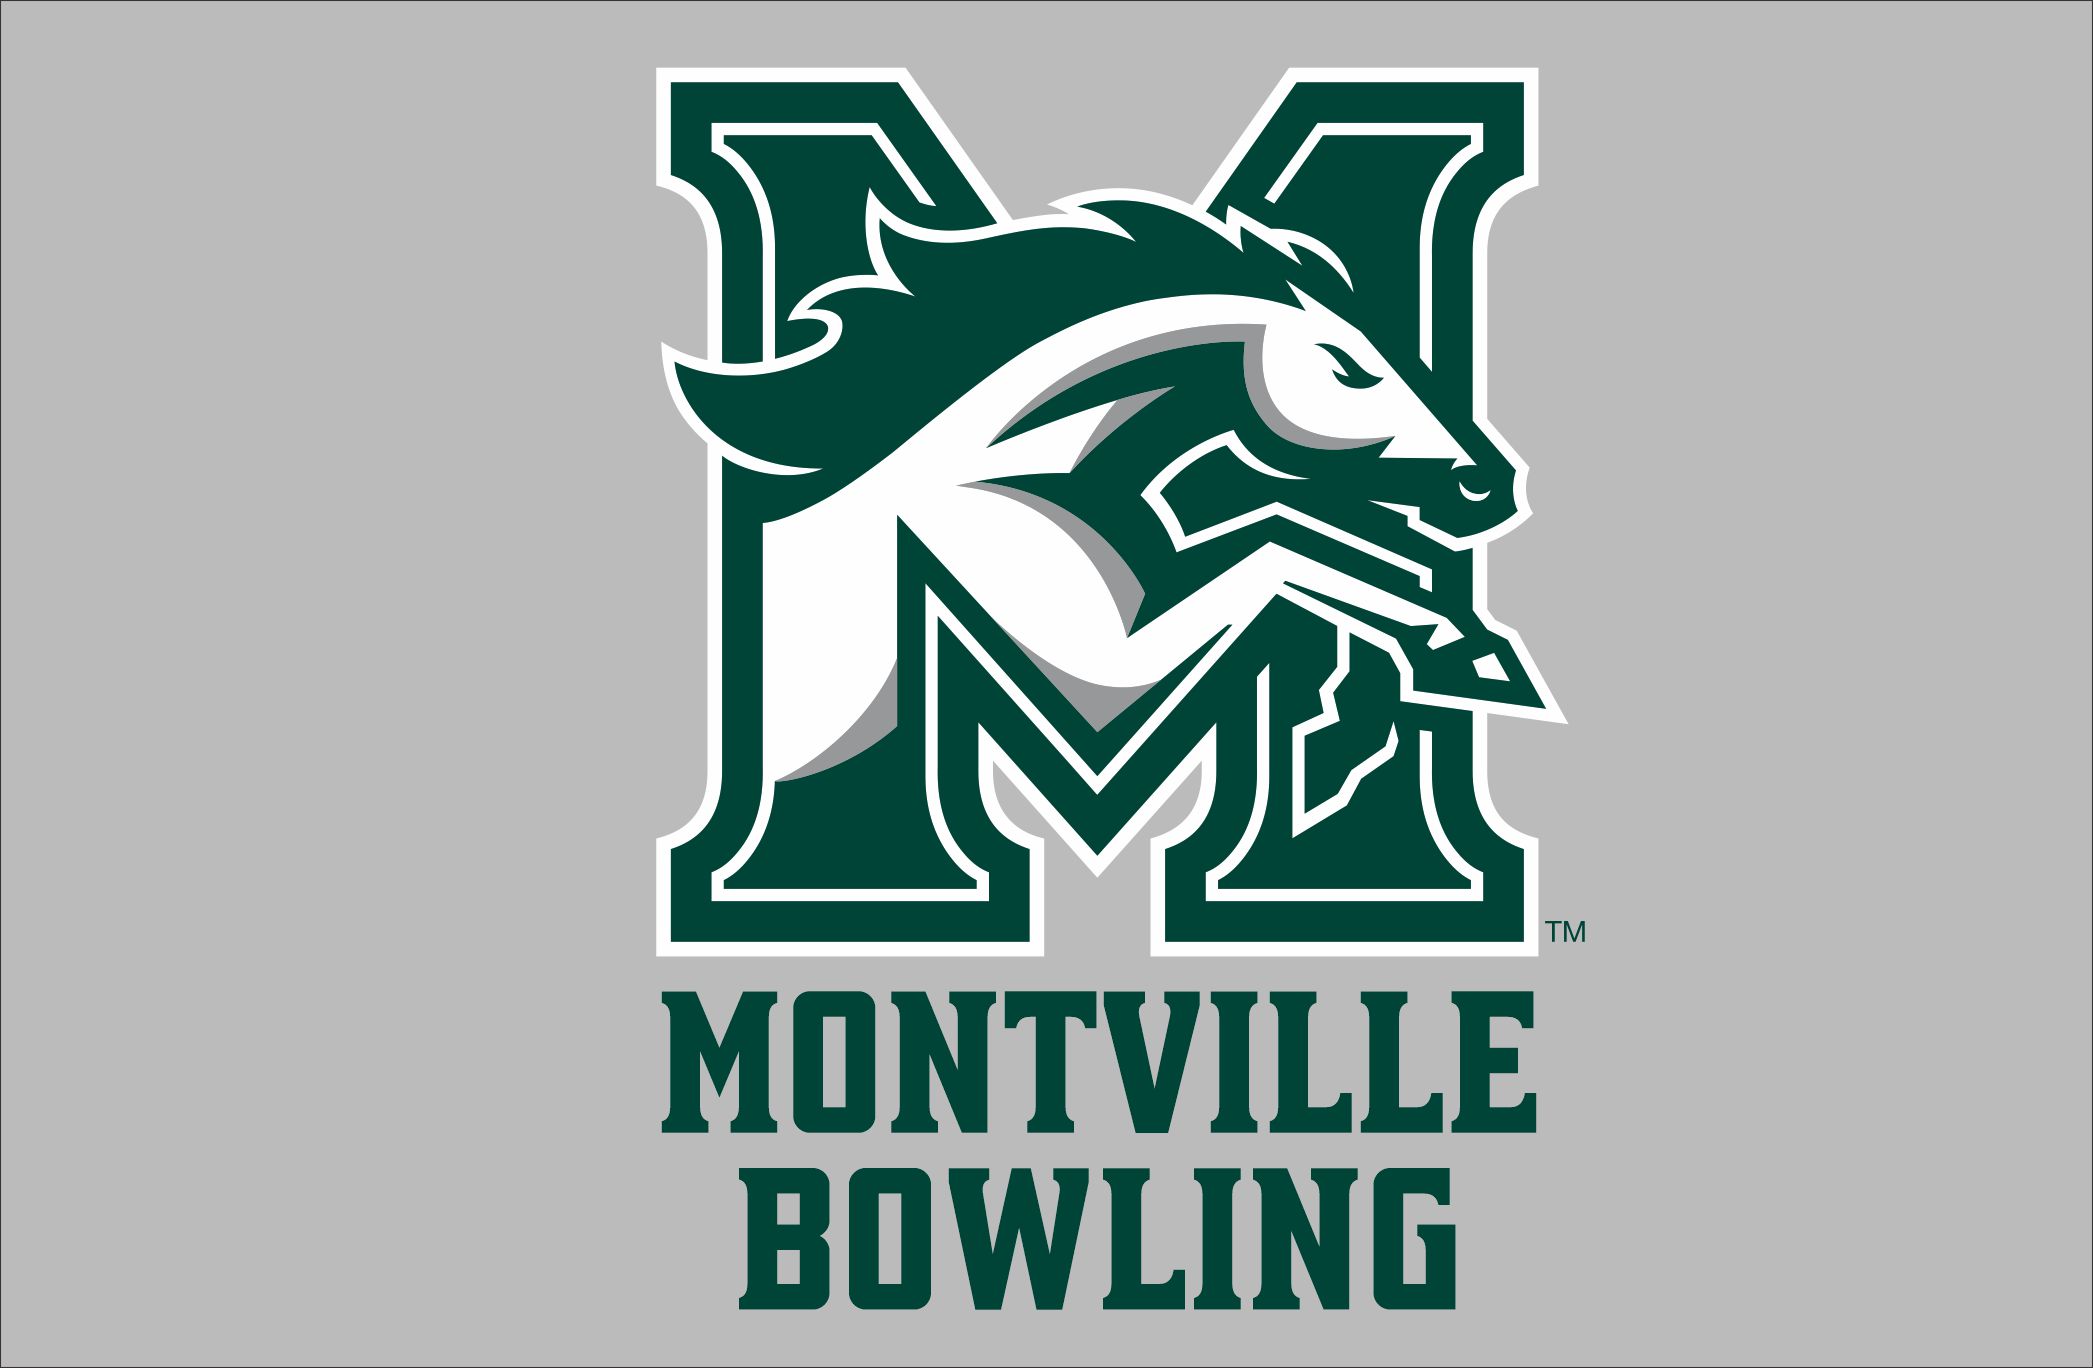 Montville Bowling Fundraiser